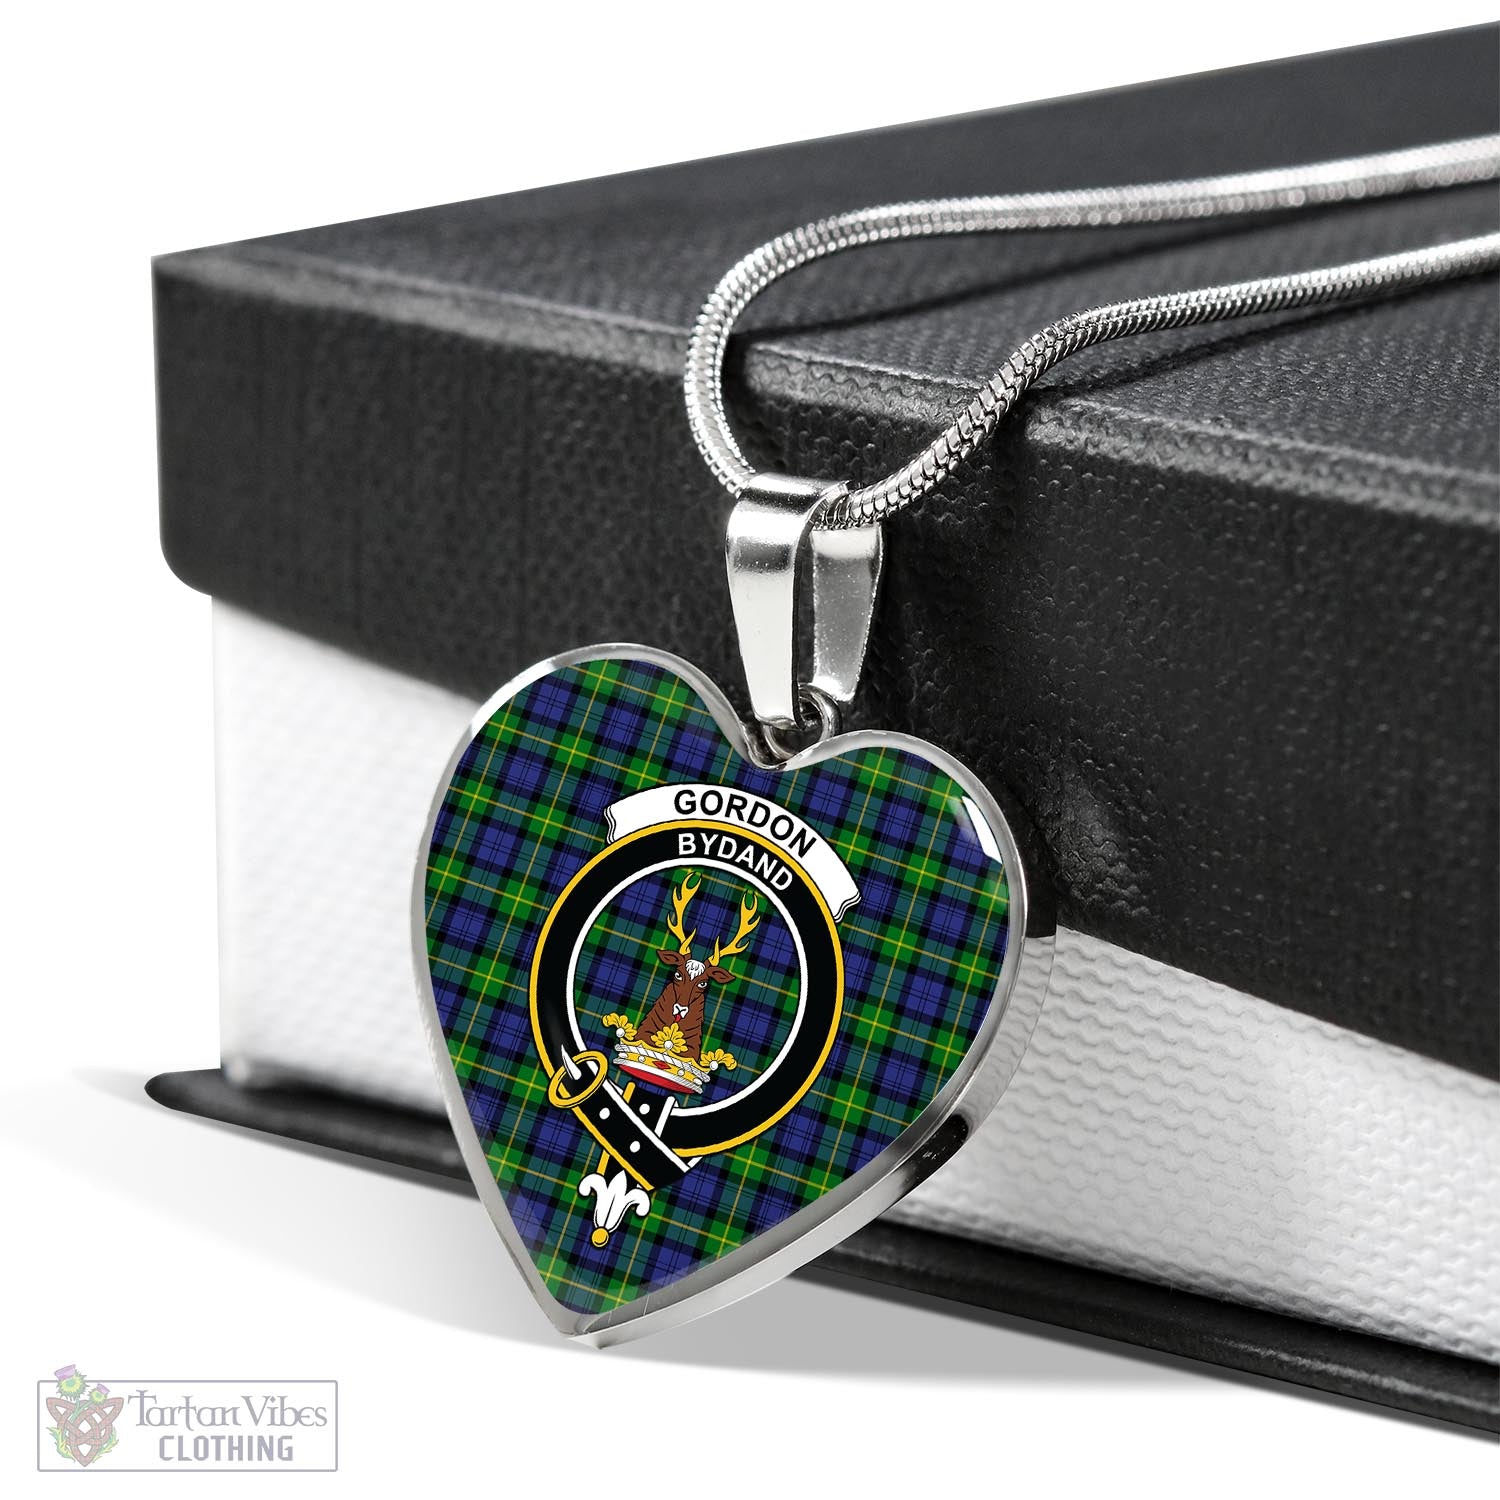 Tartan Vibes Clothing Gordon Modern Tartan Heart Necklace with Family Crest